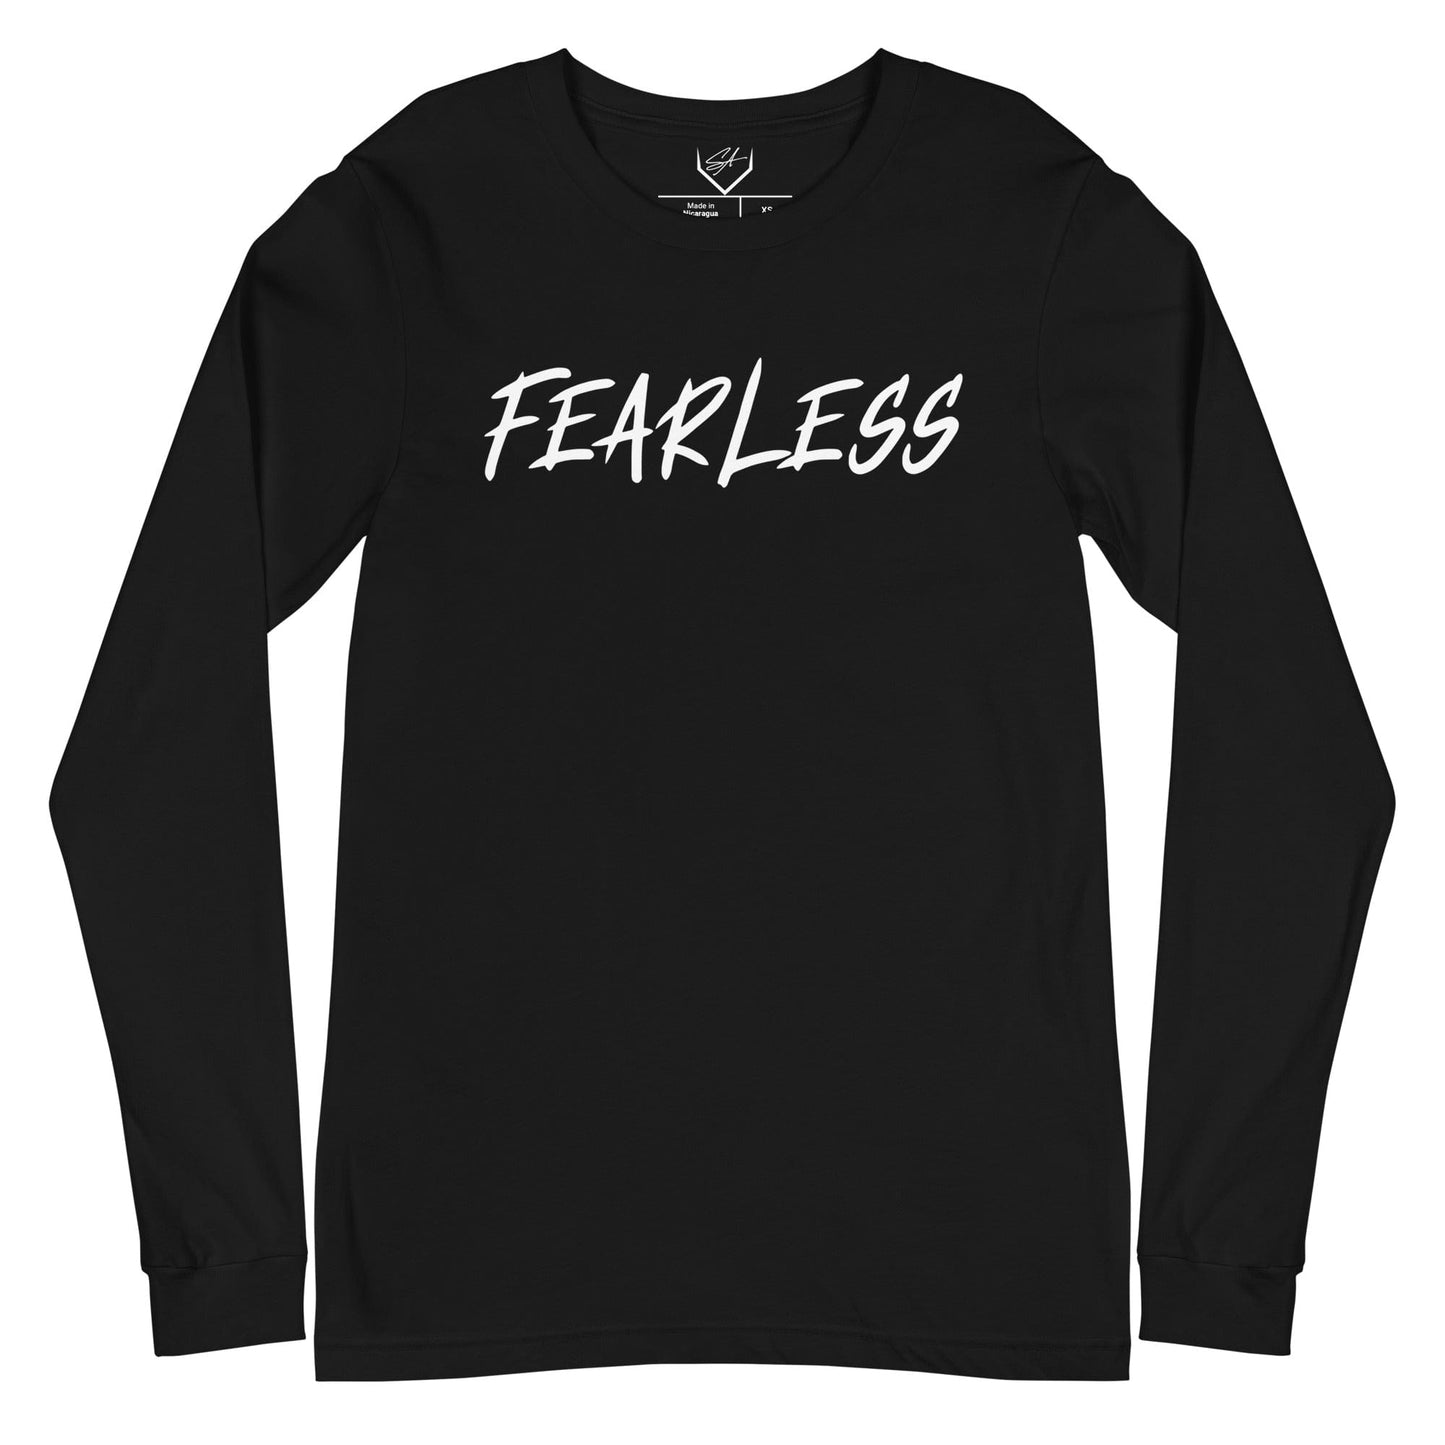 Fearless - Adult Long Sleeve